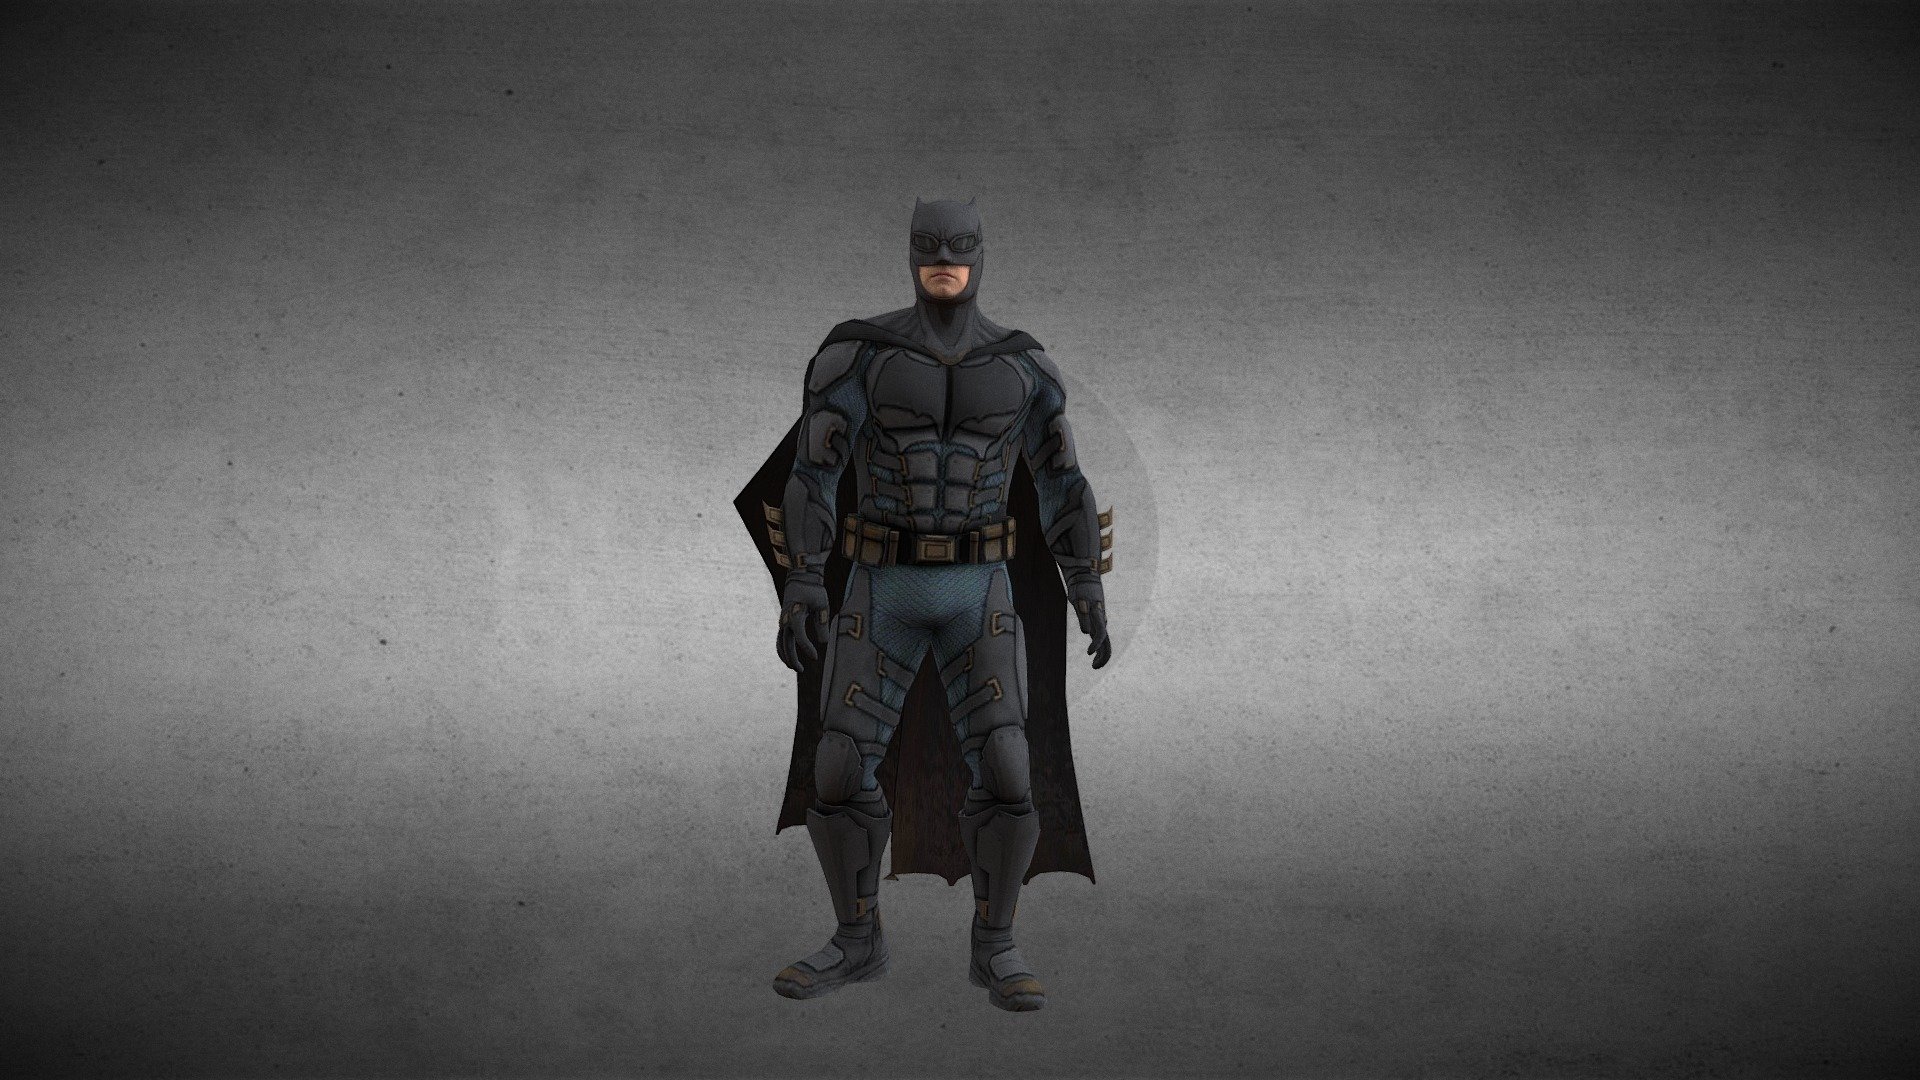 Batman INJUSTICE 2 SKIN - Looking Around 3D Model.